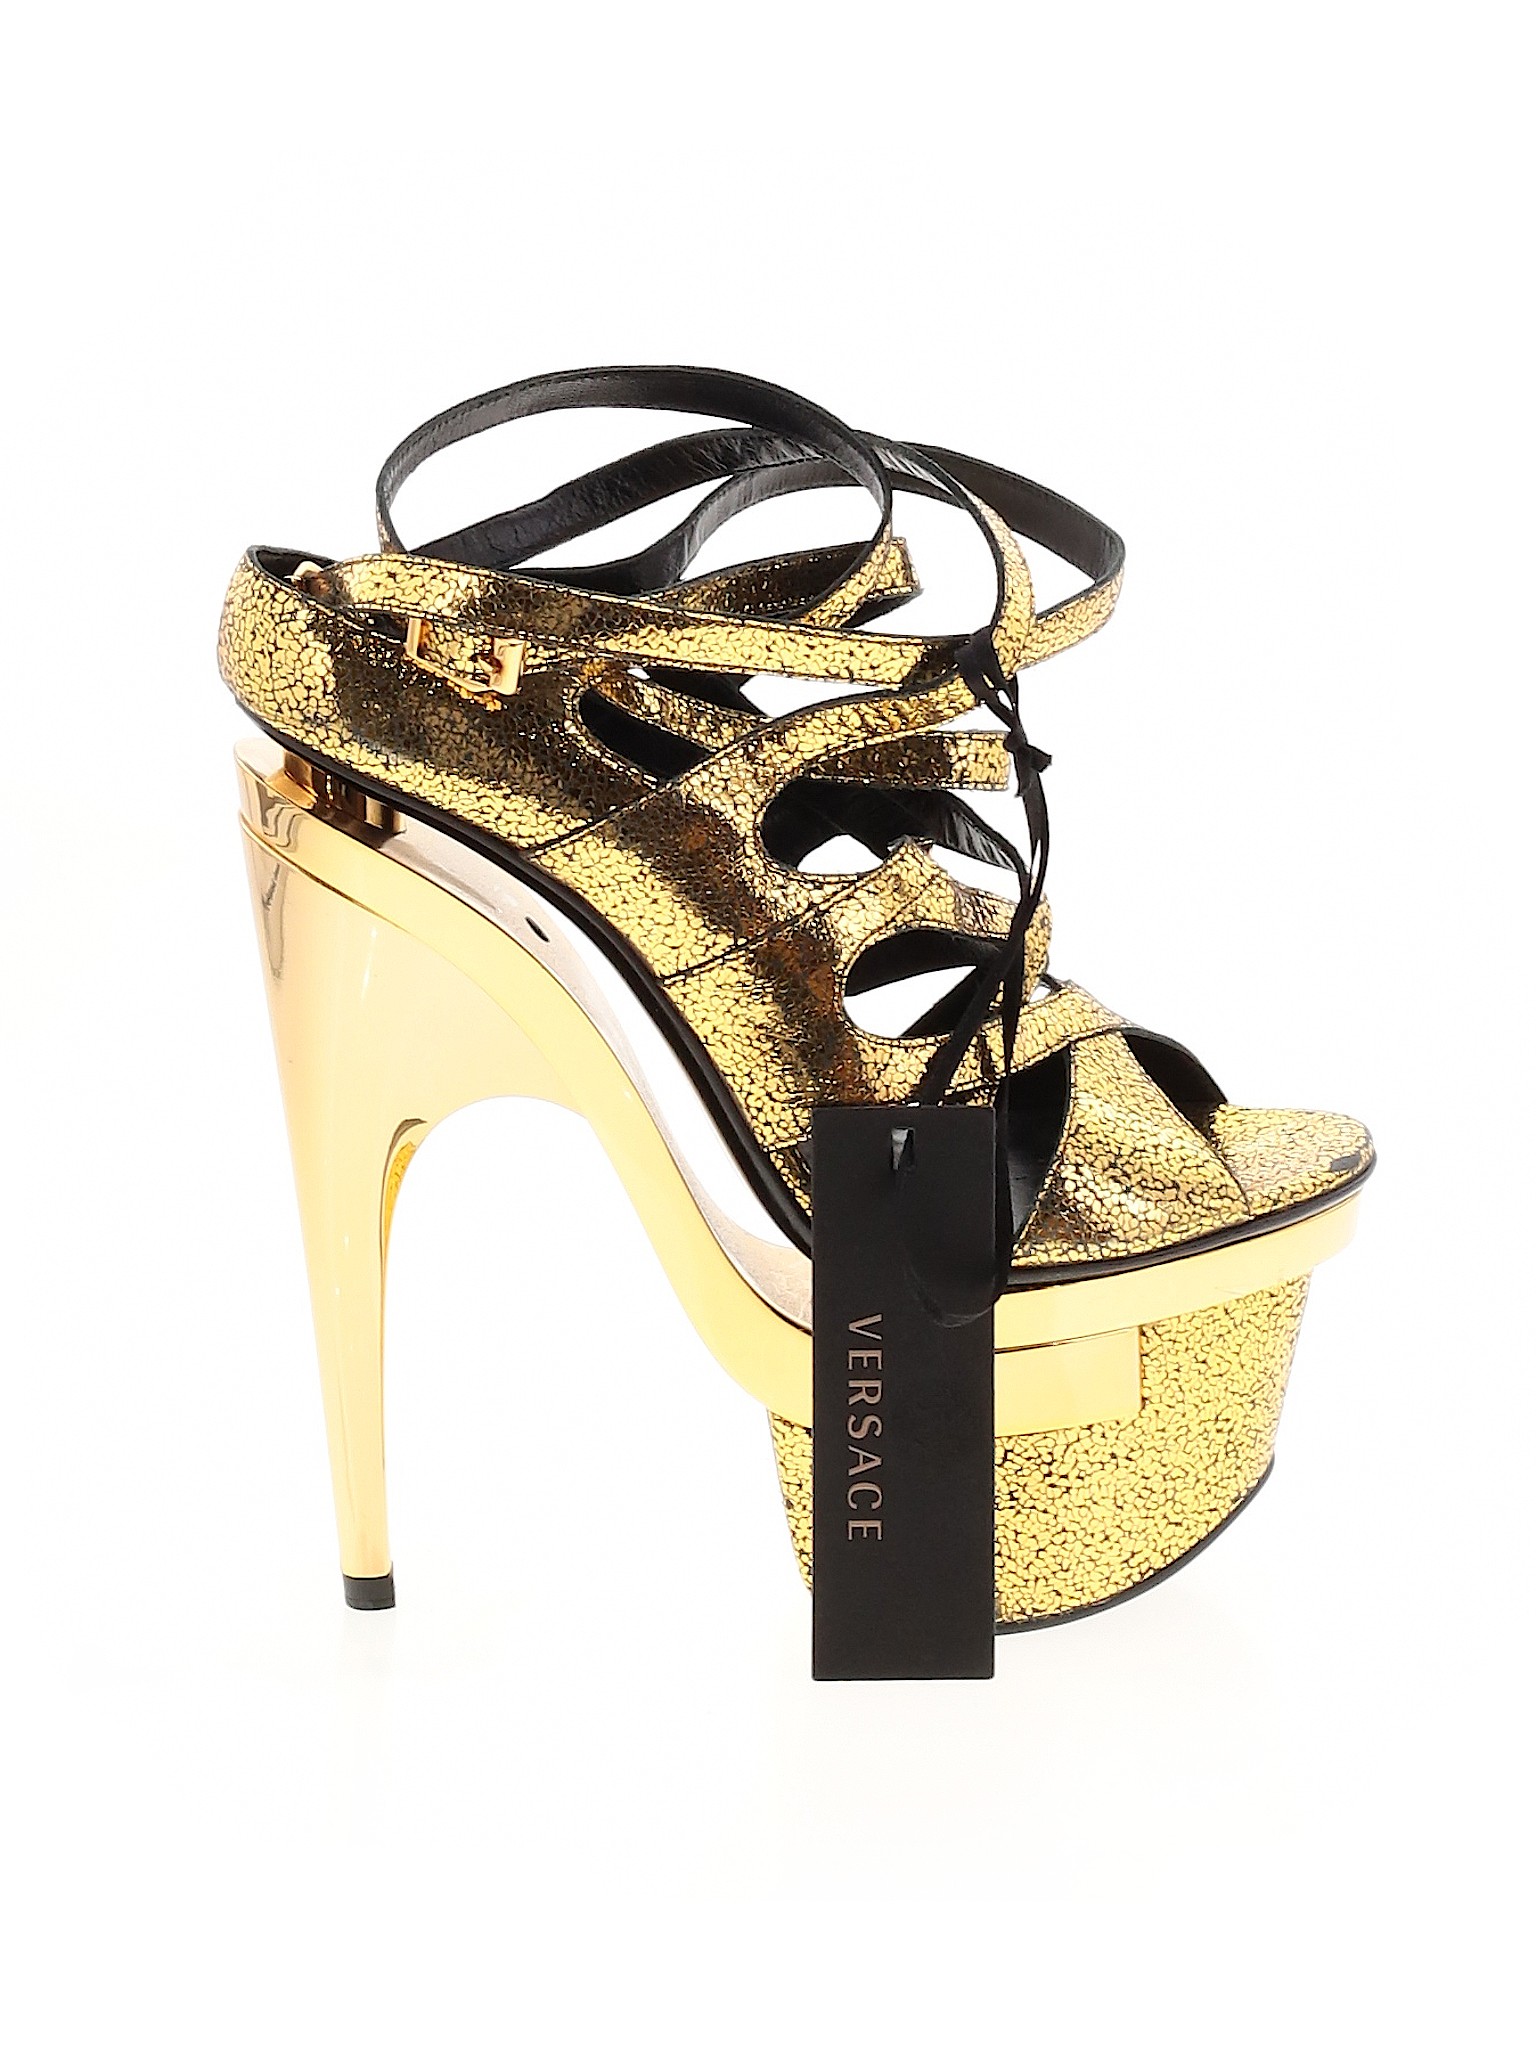 NWT Versace Women Yellow Heels US 6 1/2 | eBay